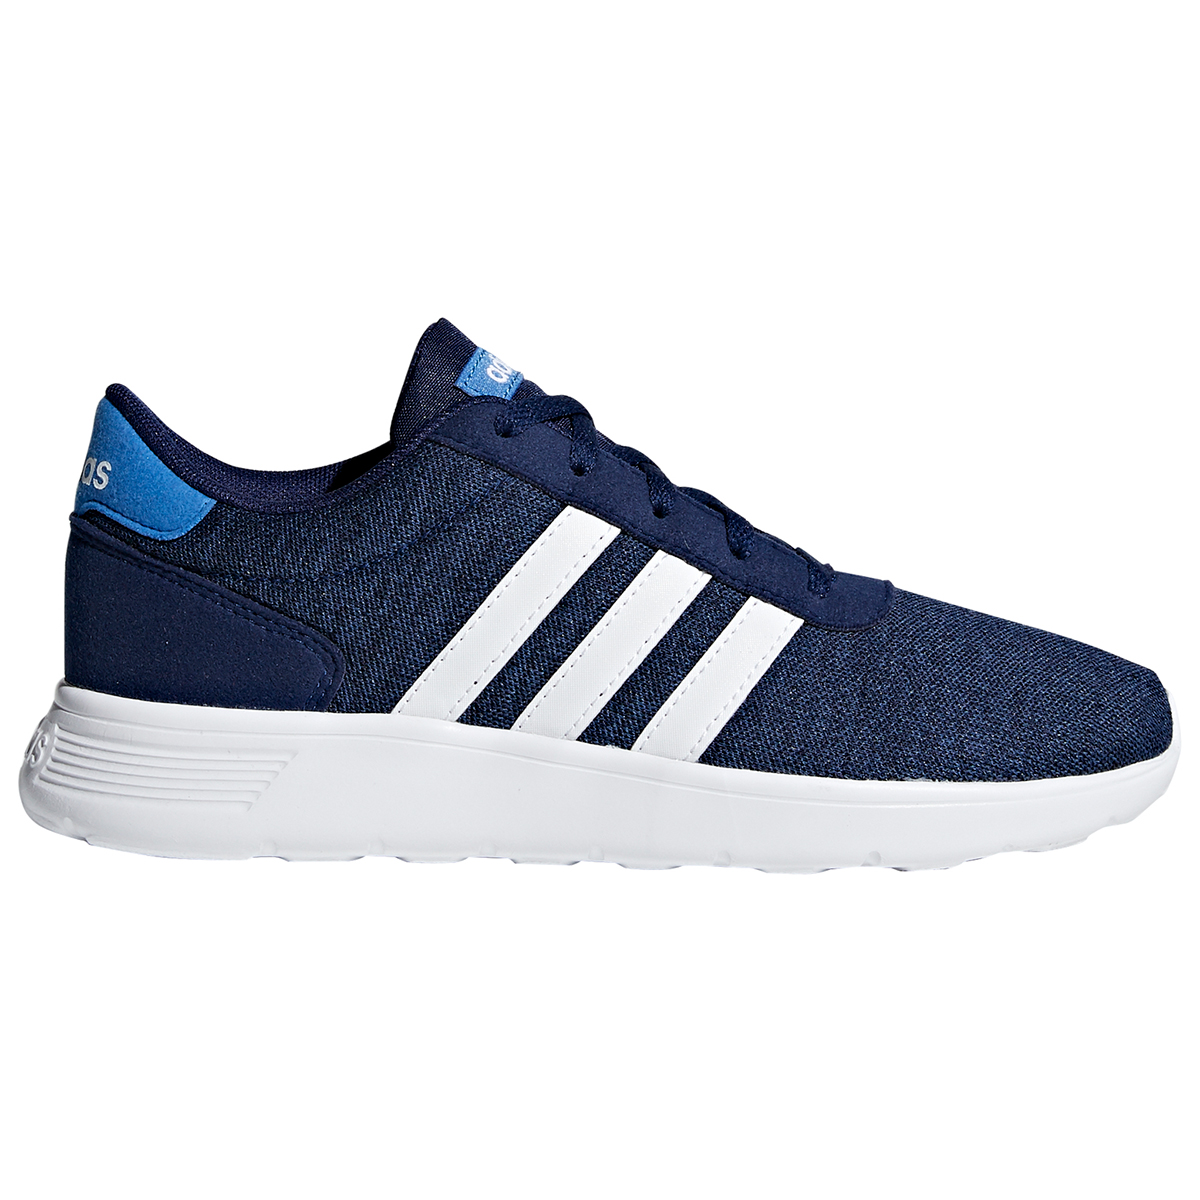 Adidas Boys' Lite Racer Sneaker - Blue, 1.5